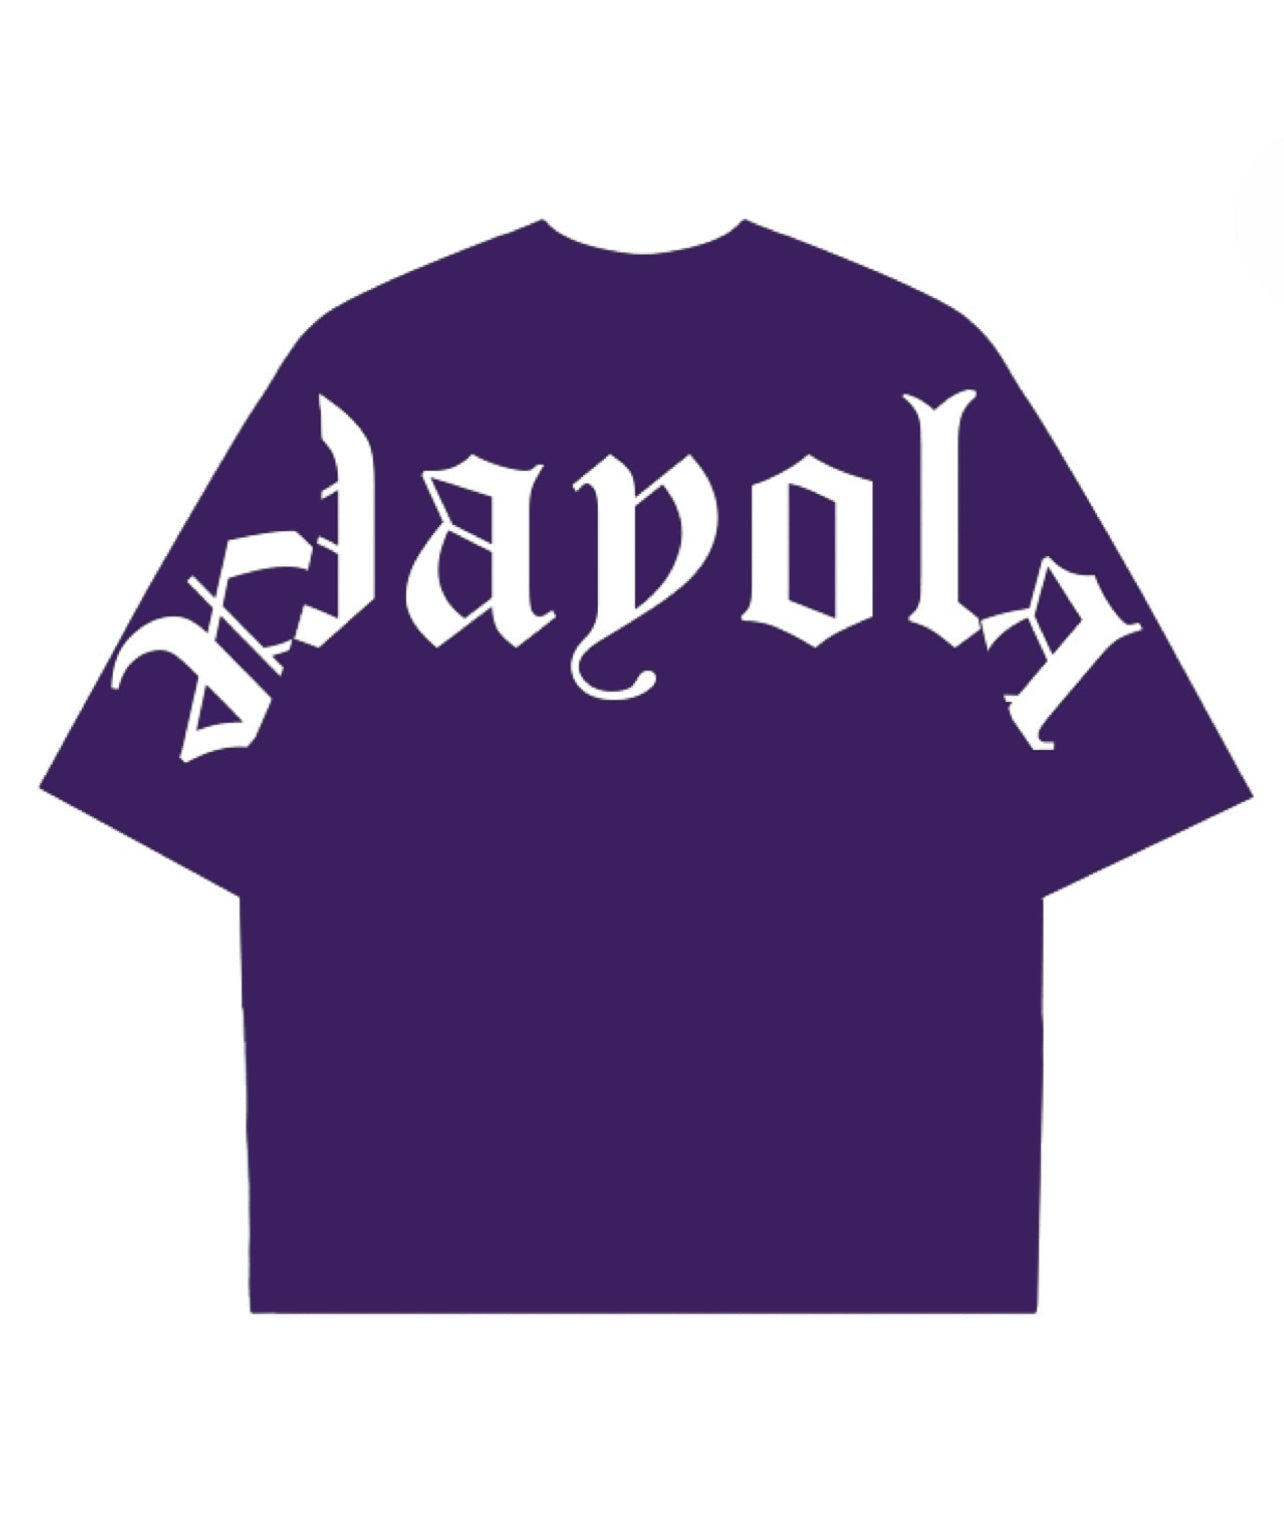 Payola Old English Shirt (Purple)